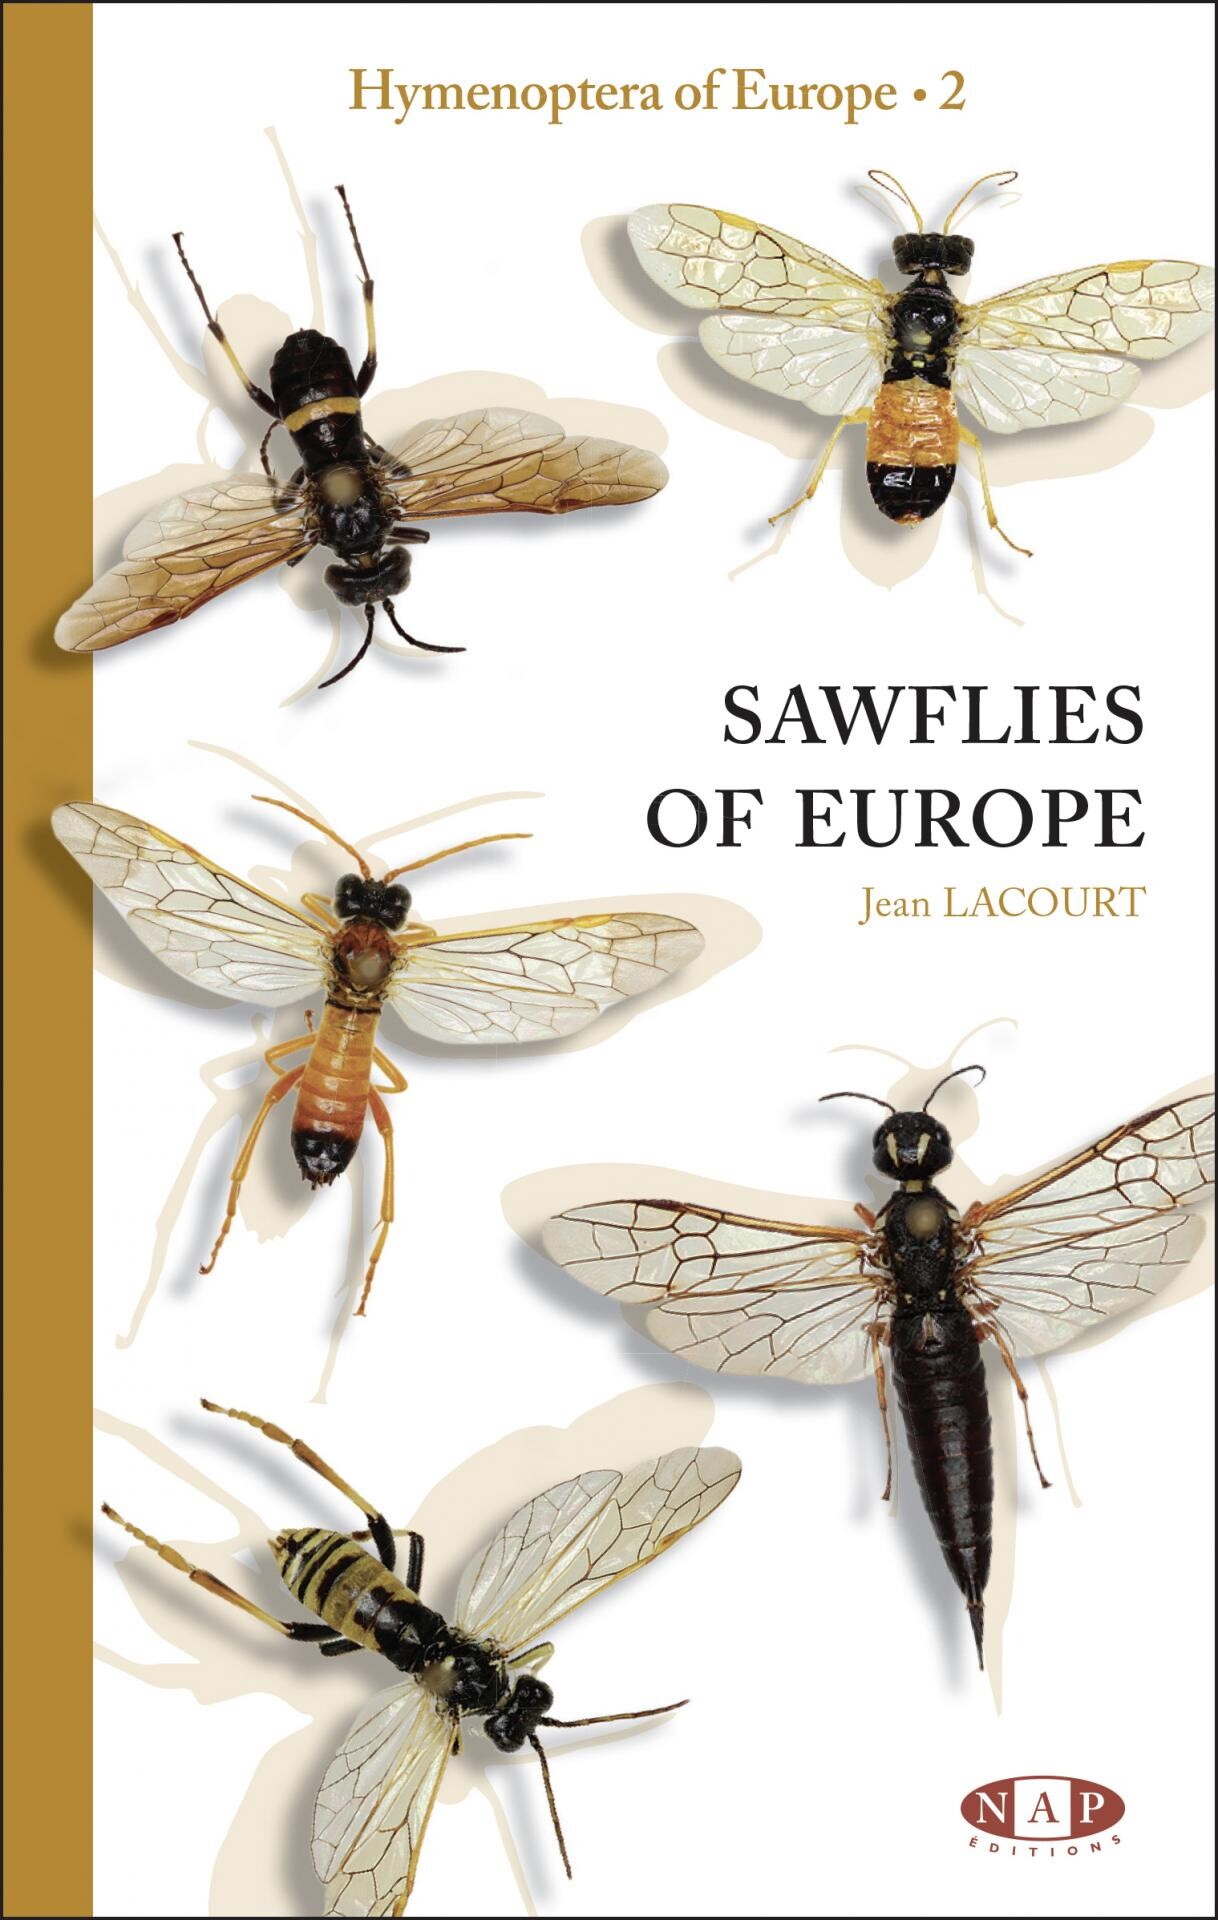 Jean Lacourt: Hymenoptera of Europe 2. - Sawflies of Europe (Rippl-Rónai Múzeum CC BY-NC-ND)